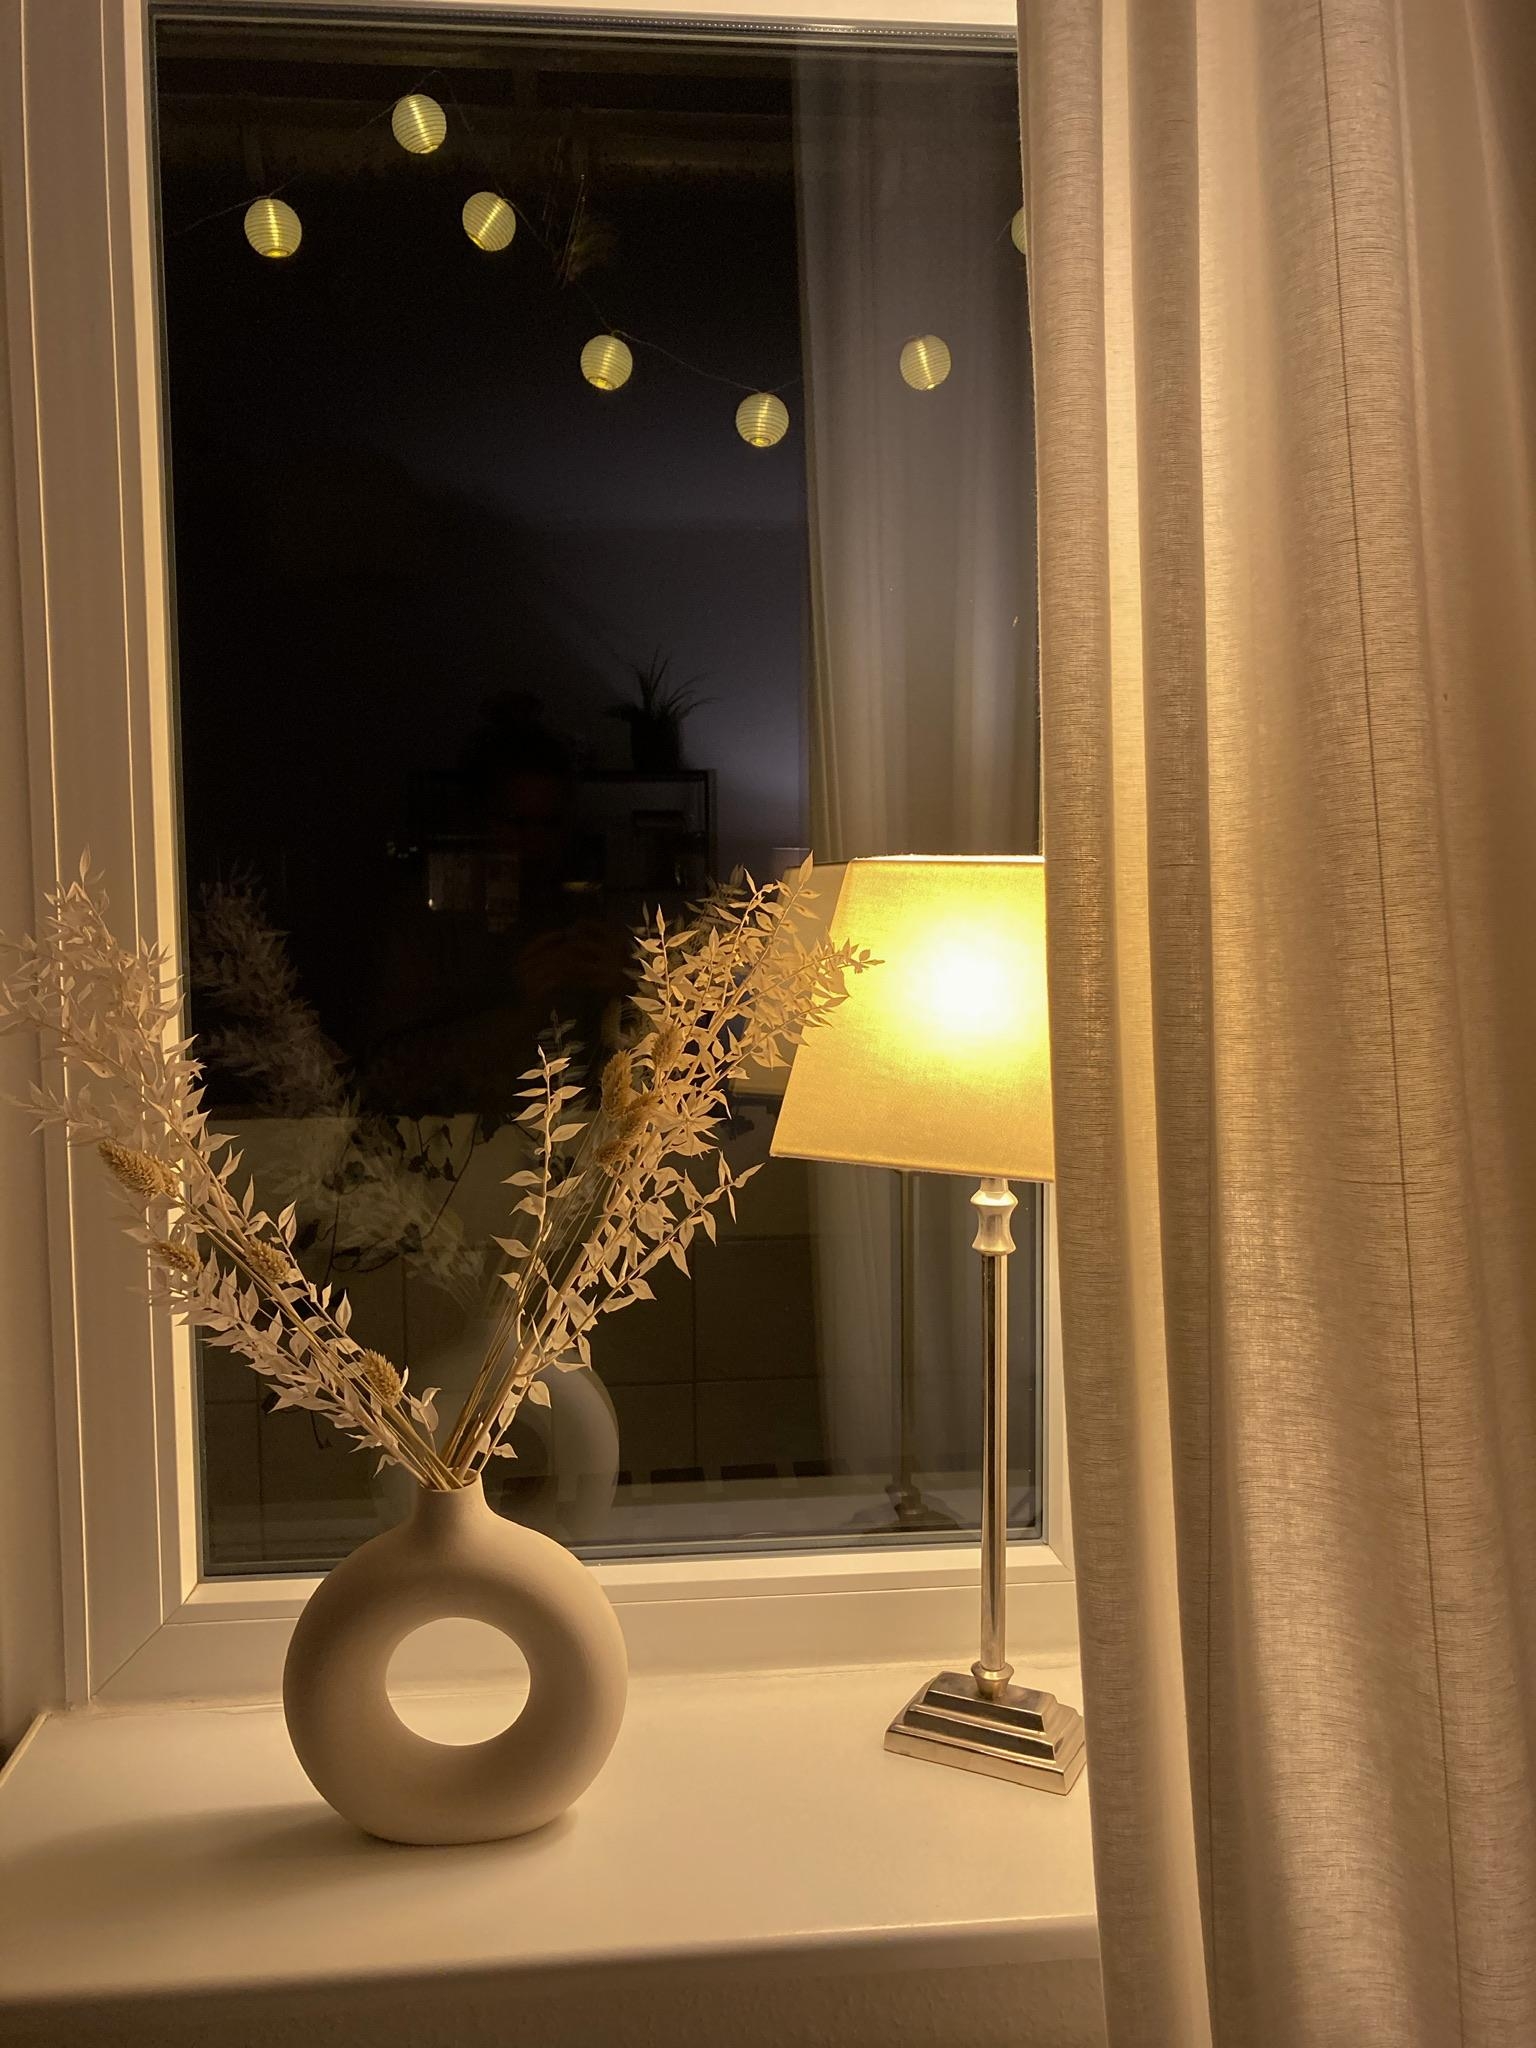 Festtagsbeleuchtung geht auch ohne Festgedöns!
#winter #vase #decoration 